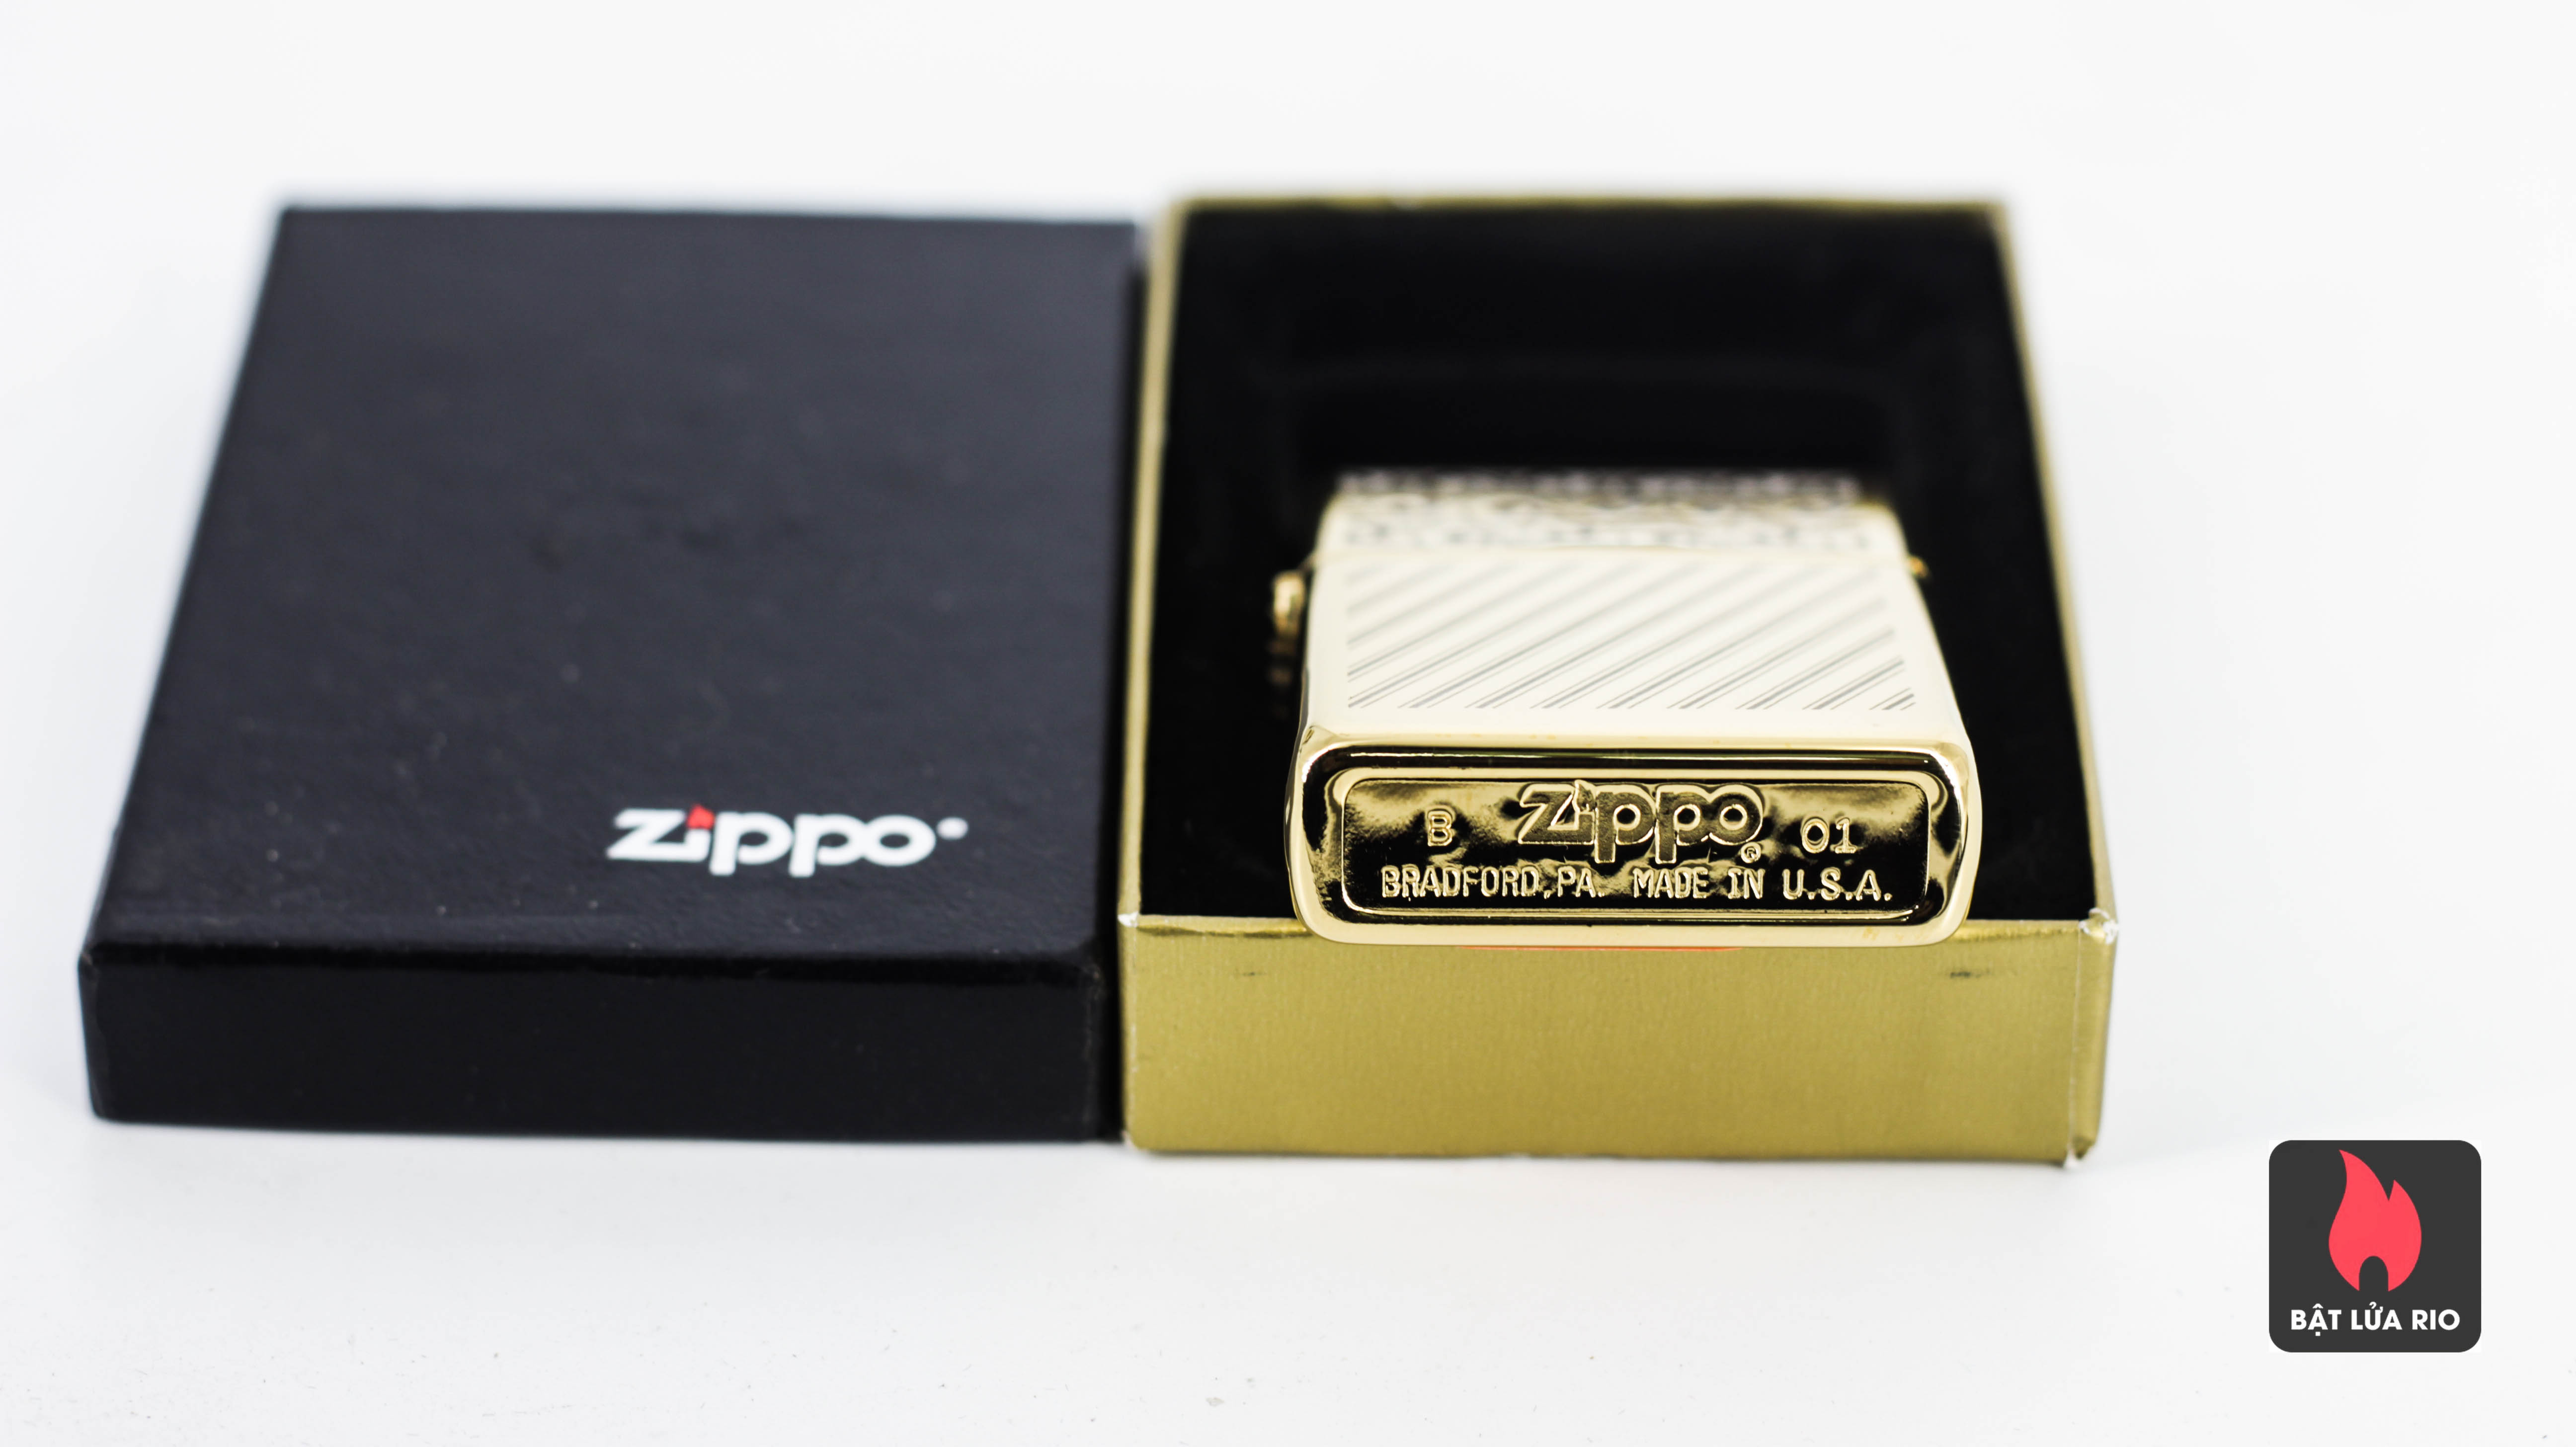 ZIPPO 2001 - GOLD PLATE